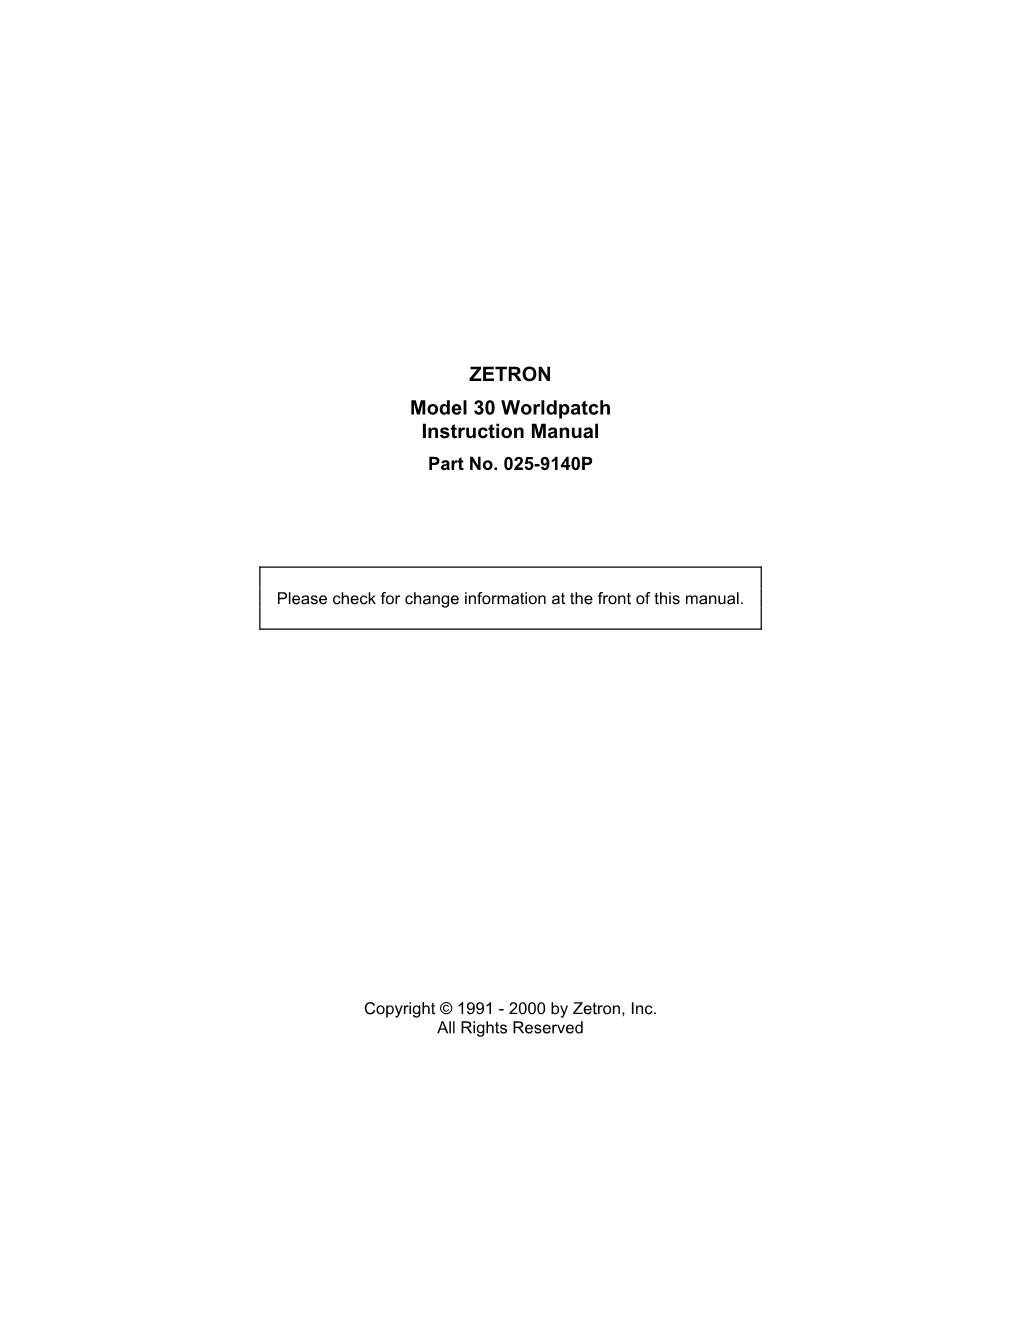 ZETRON Model 30 Worldpatch Instruction Manual Part No